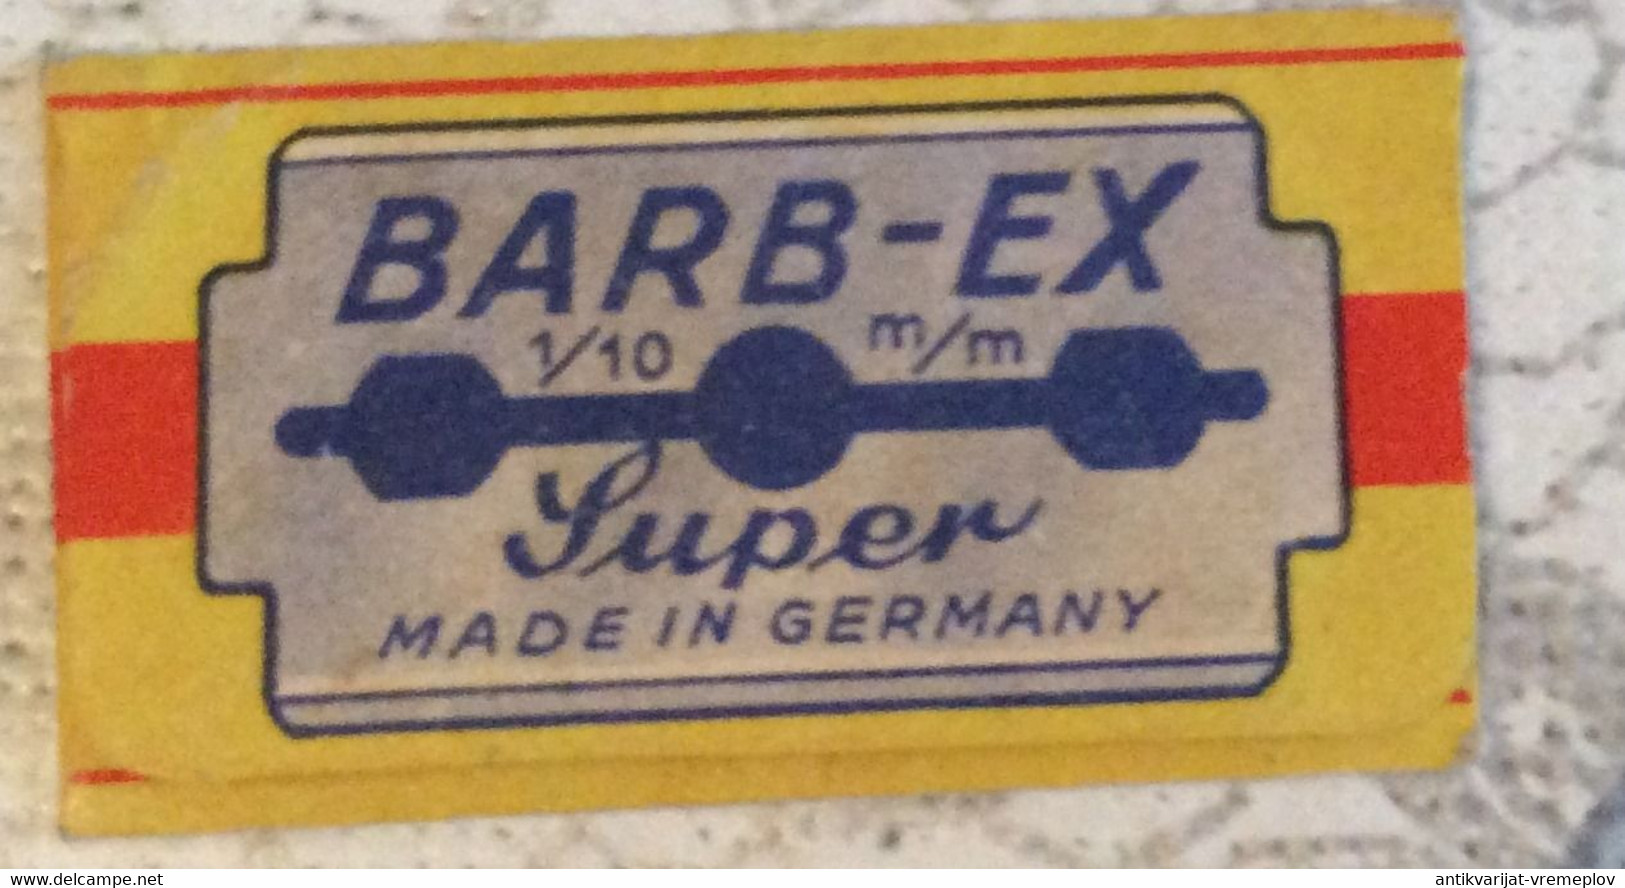 VINTAGE RAZOR BLADES ZILETI VEICOLI FAHRZEUGE BARB - EX SUPER MADE IN GERMANY - Lamette Da Barba